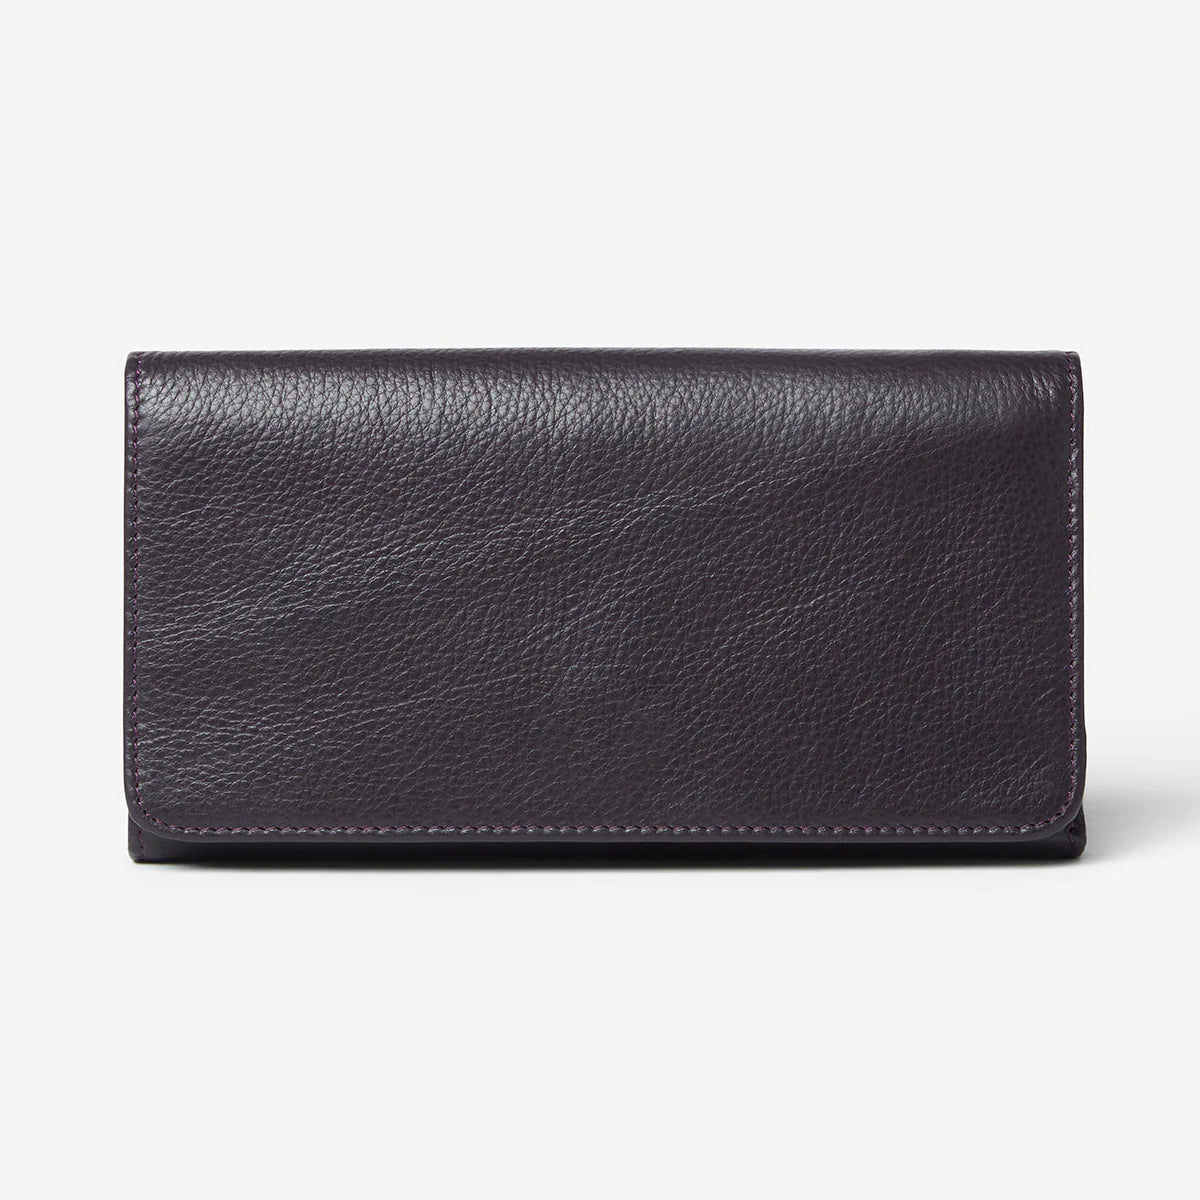 Osgoode Marley Leather RFID Checkbook Wallet